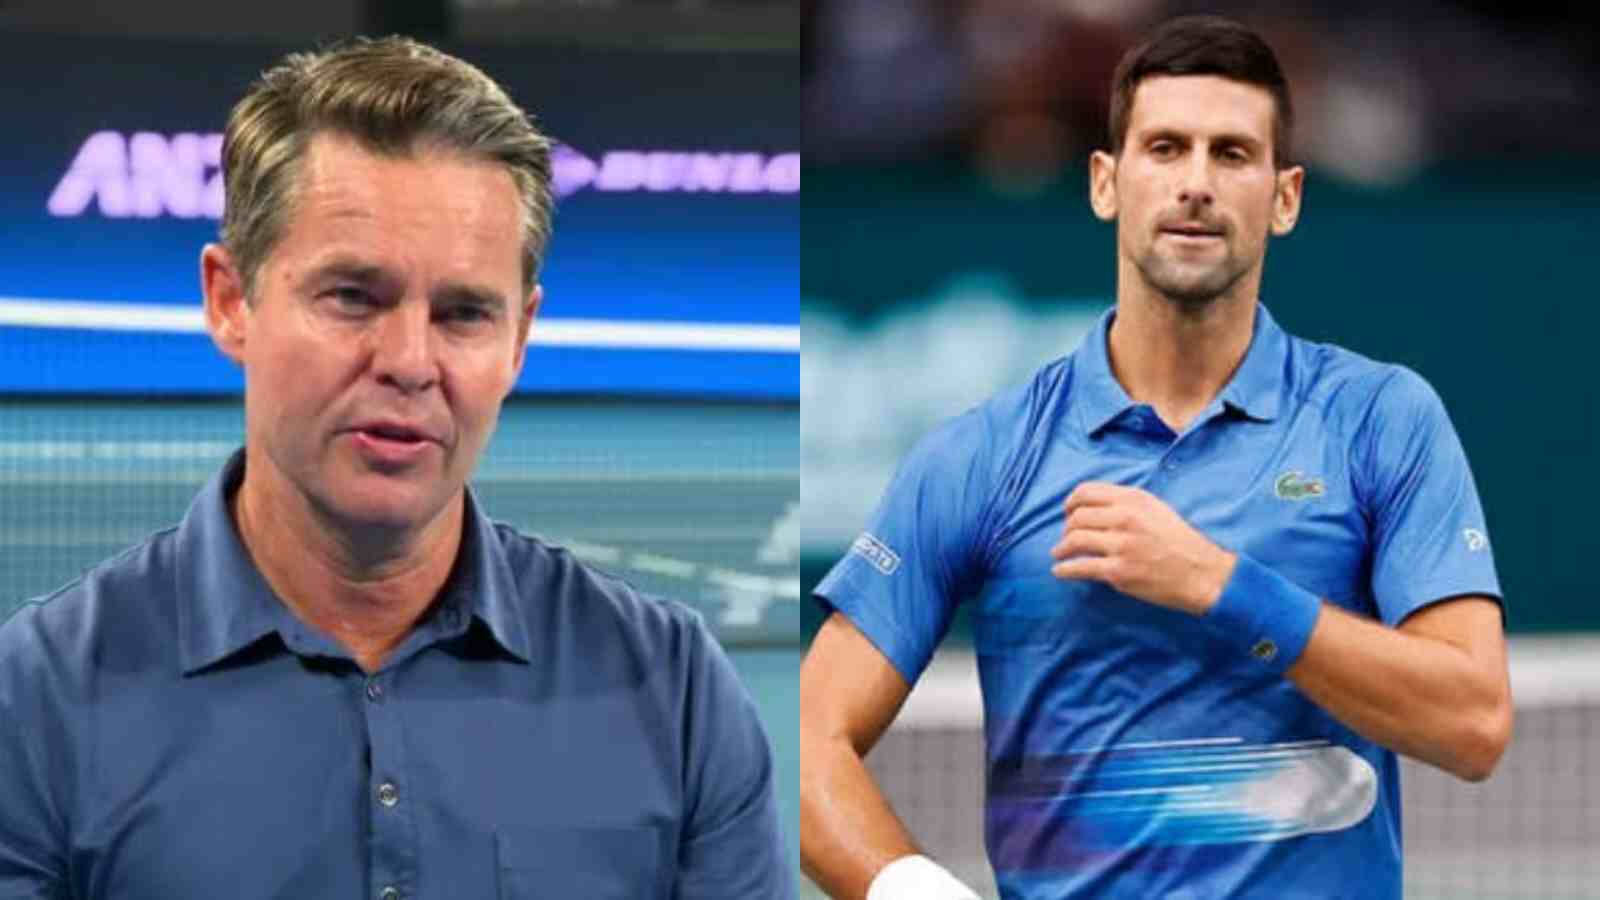 Toddwoodbridge Und Novak Djokovic In Blau Wallpaper